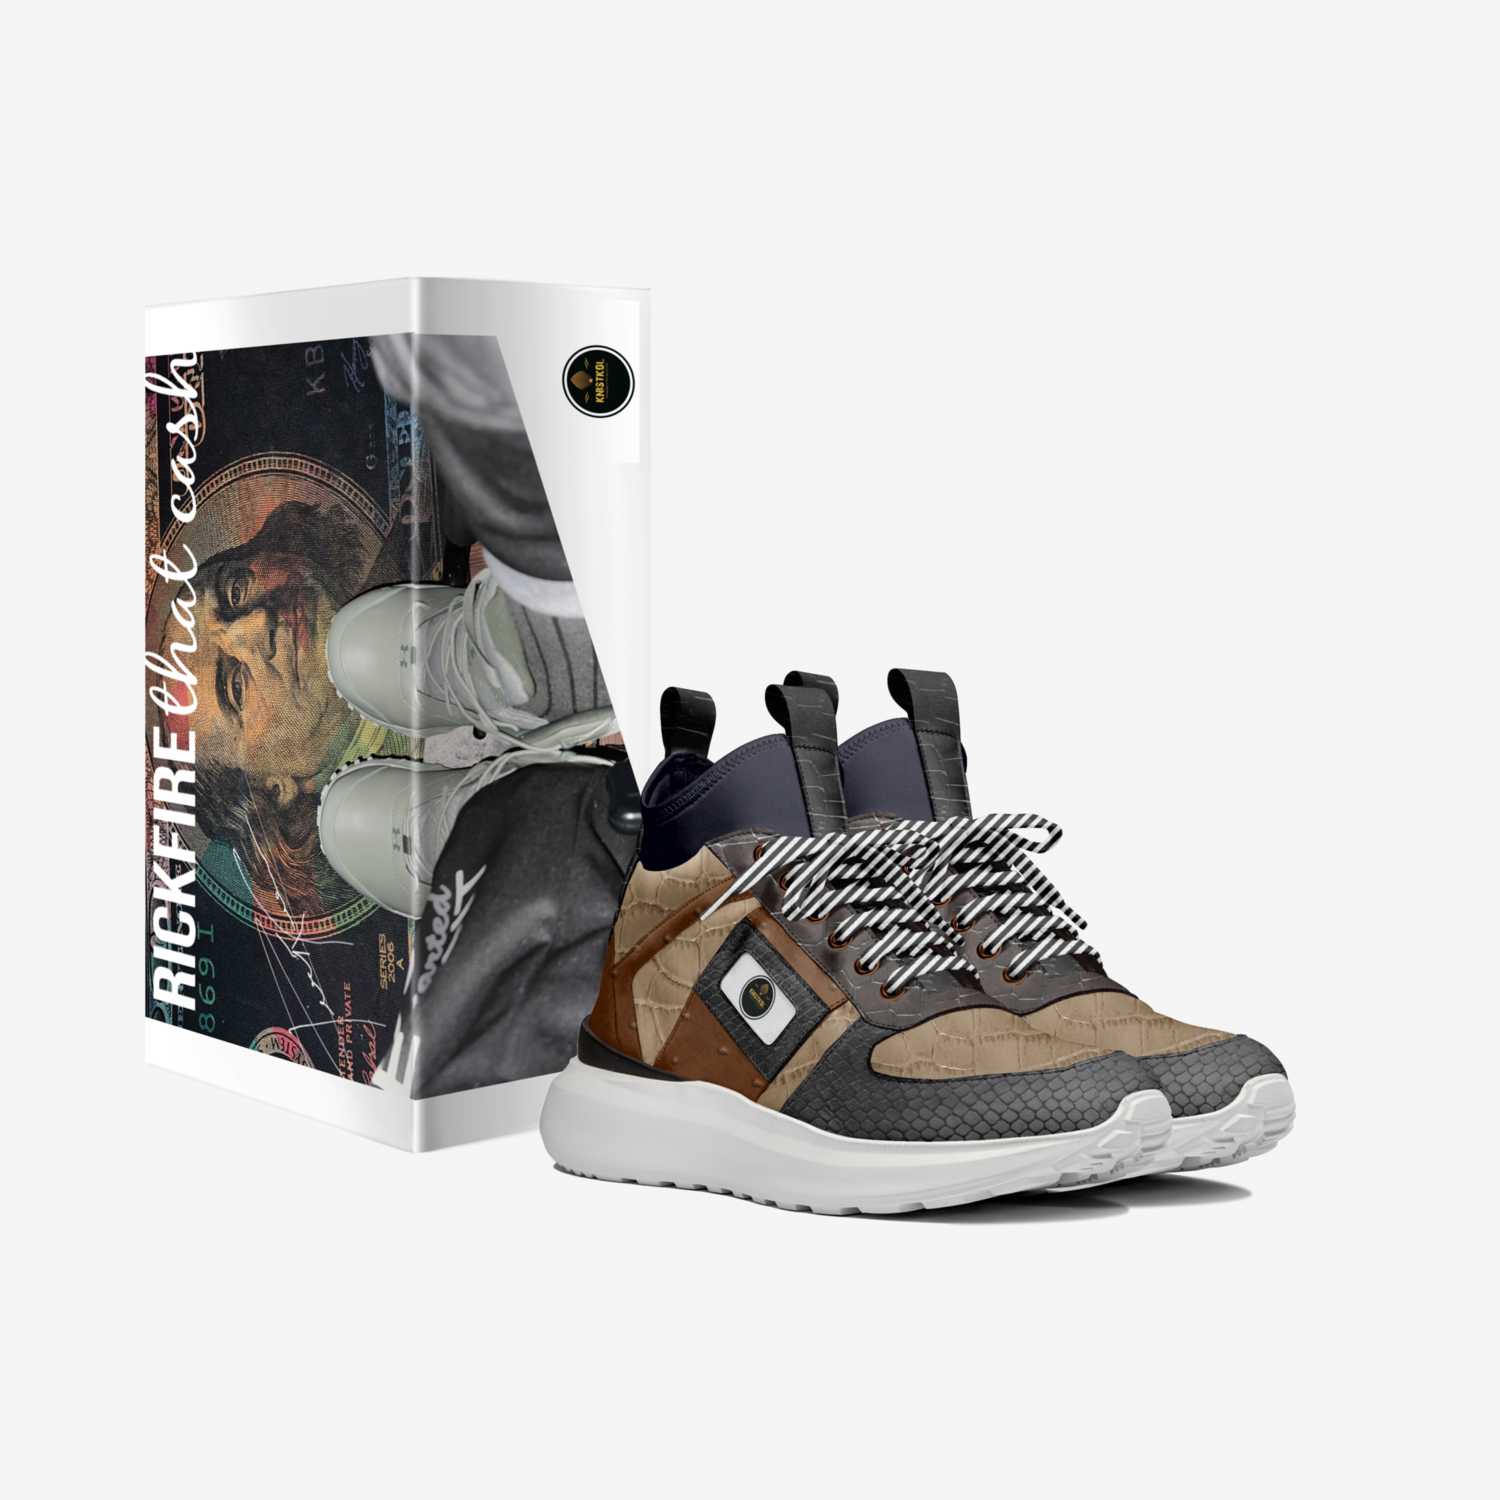 KNISTKOL custom made in Italy shoes by Ricardo Velasquez | Box view